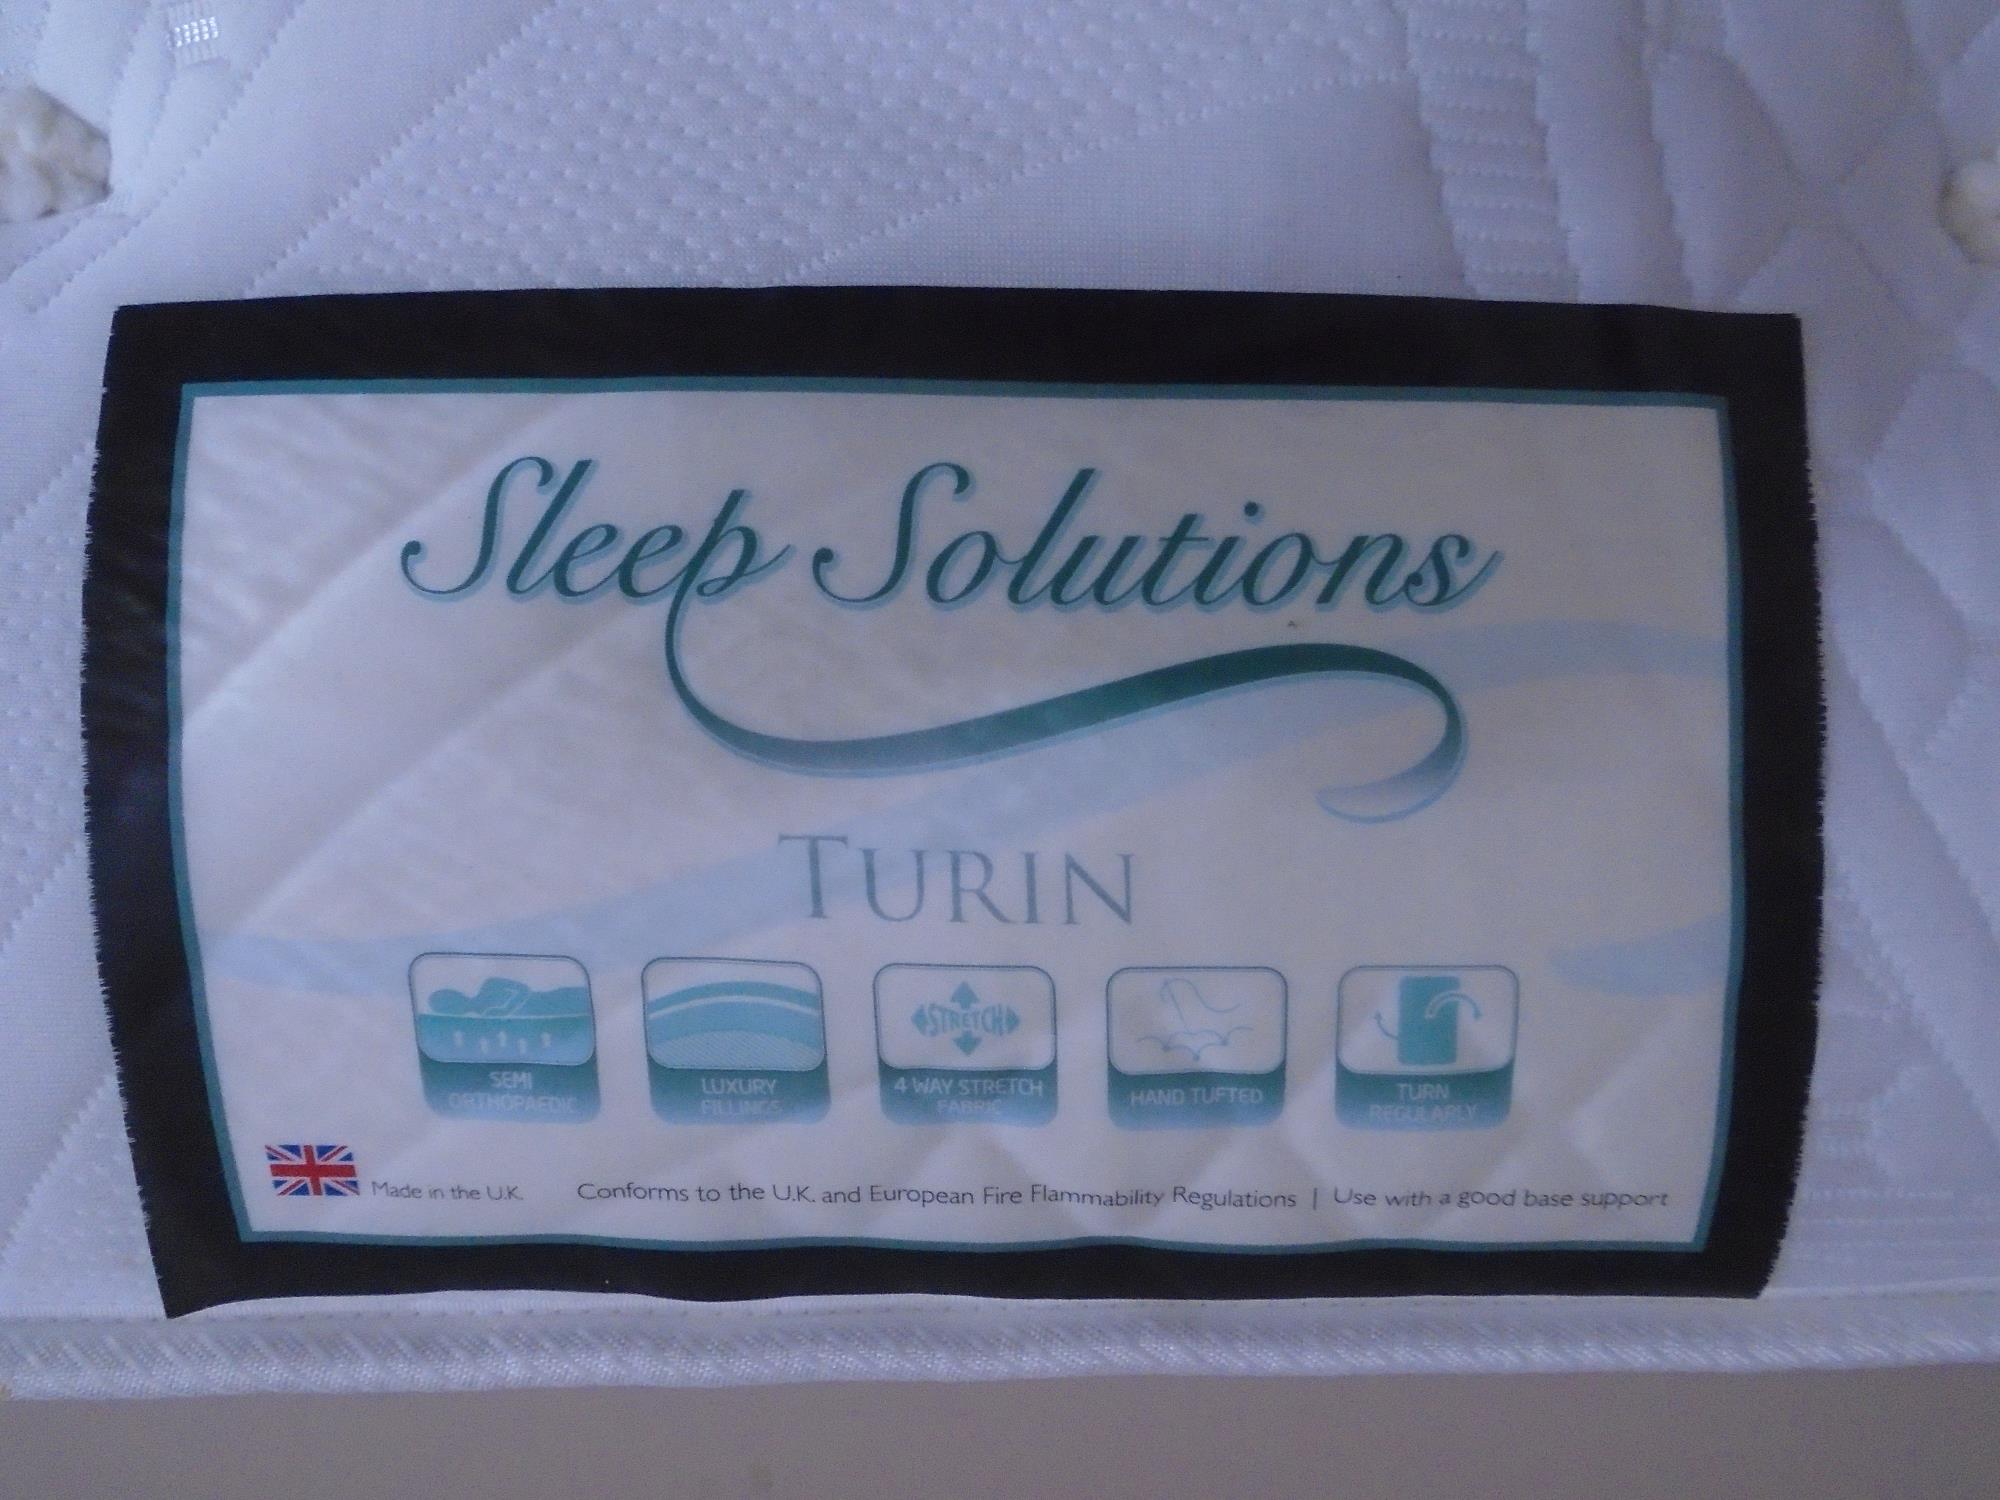 A 4' Sleep Solutions Turin mattress - Image 2 of 2